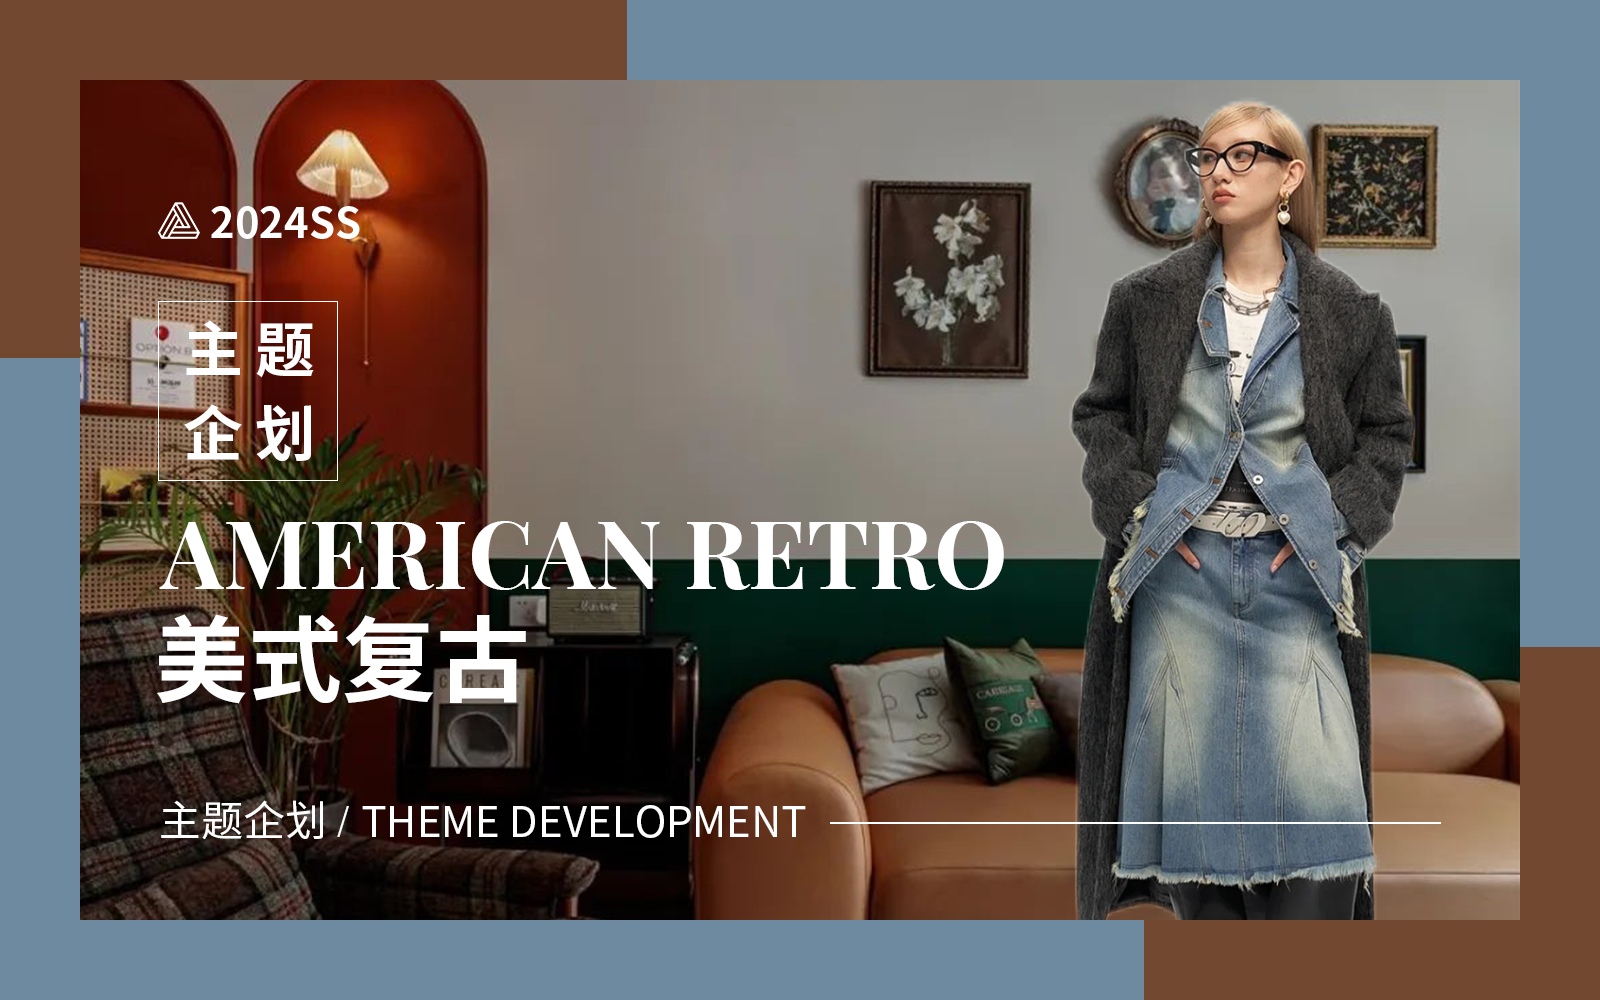 American Retro -- The Design Development of Denim